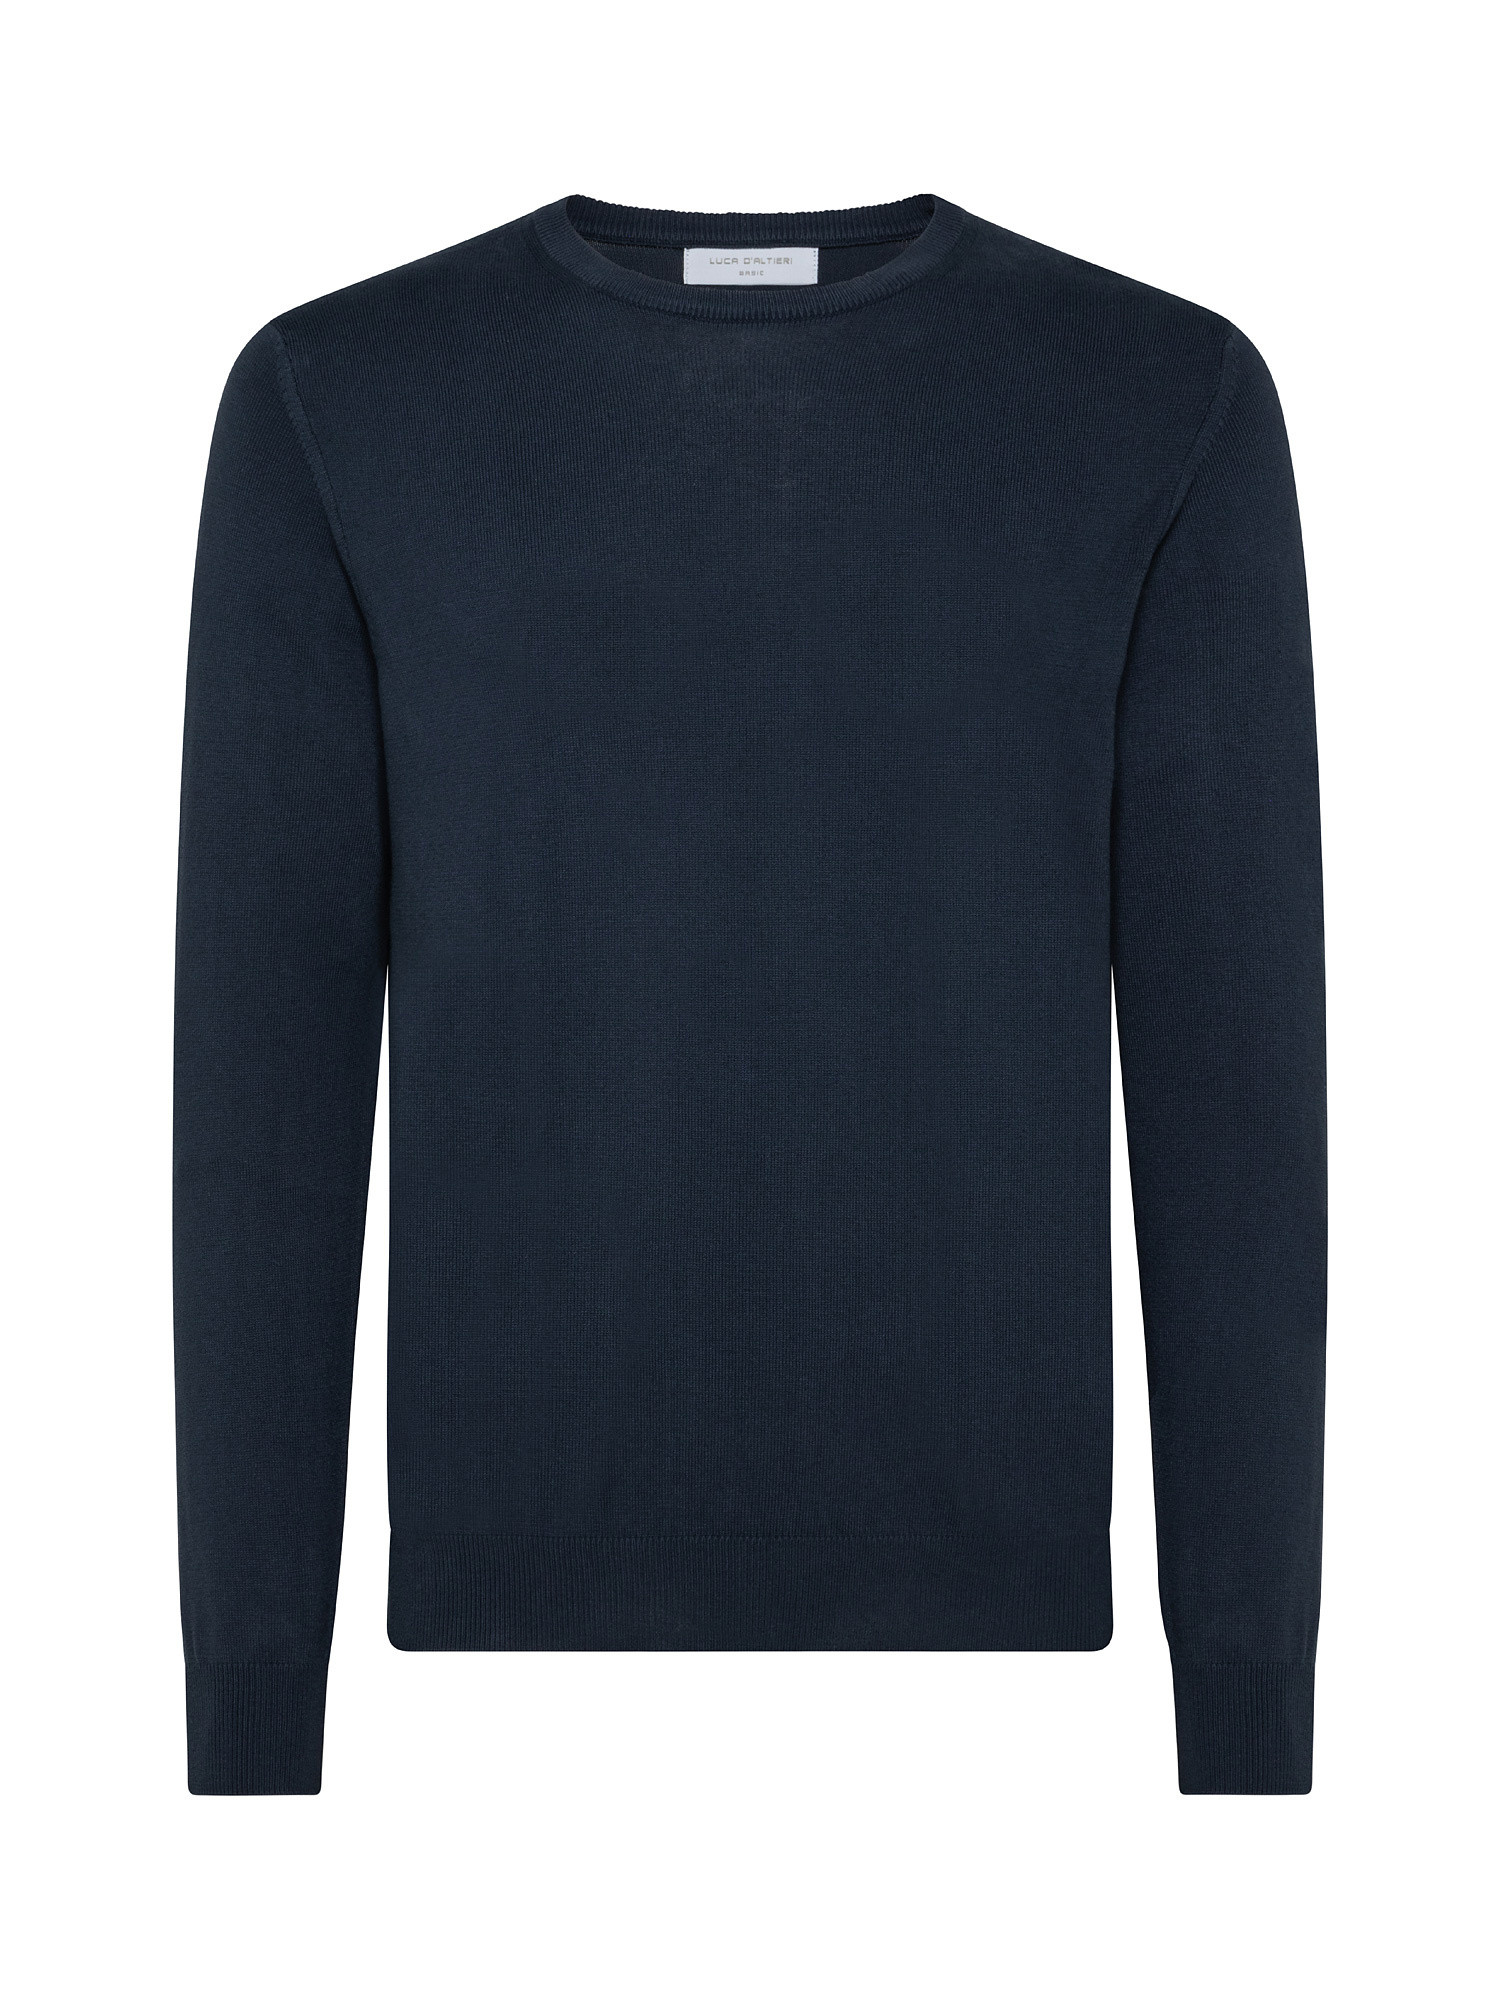 Pure cotton crewneck sweater, Dark Blue, large image number 0